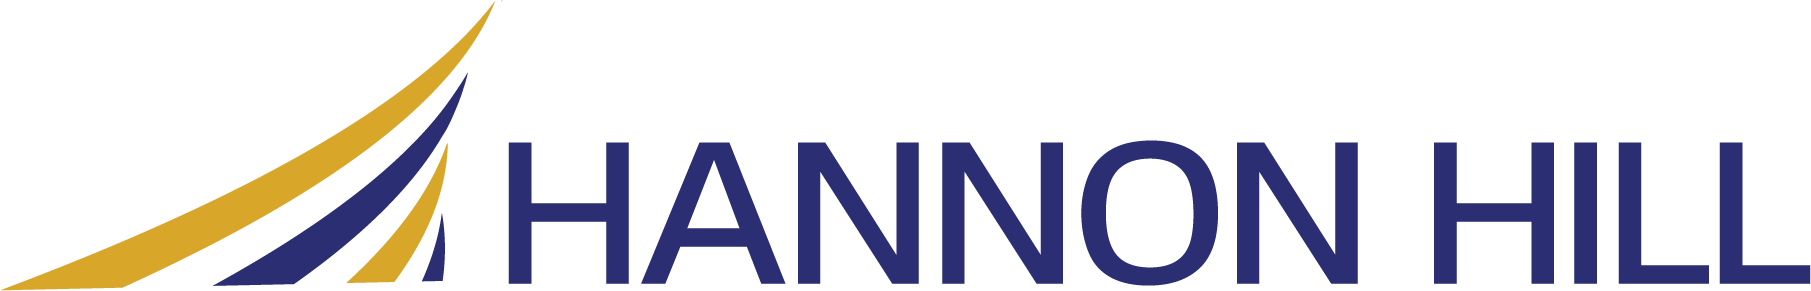 Hannon Hill Logo Image